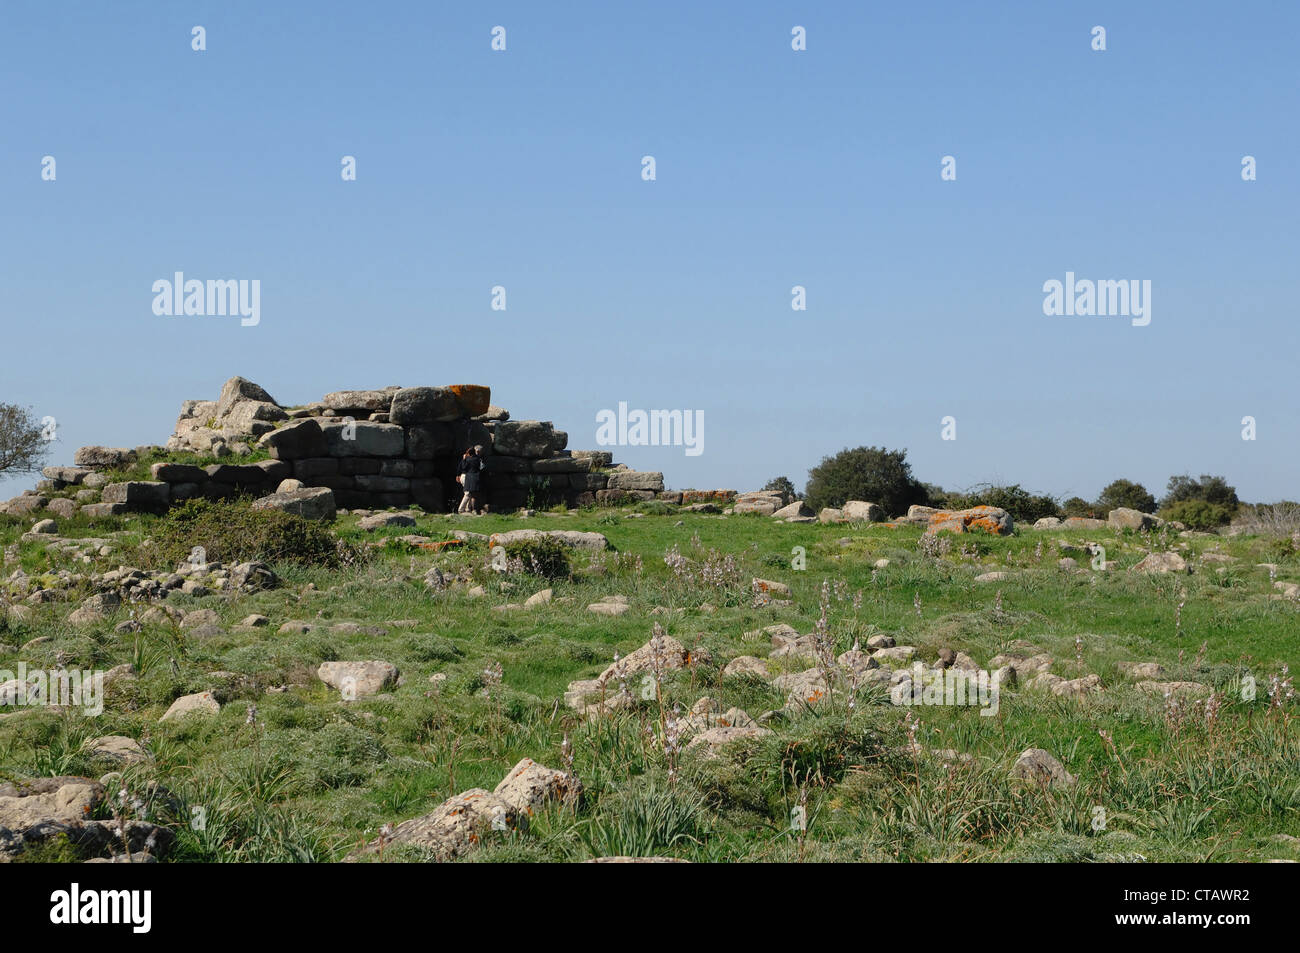 a view of giants' grave, sa domu e s'orku, near Siddi village, Sardinia, Italy Stock Photo